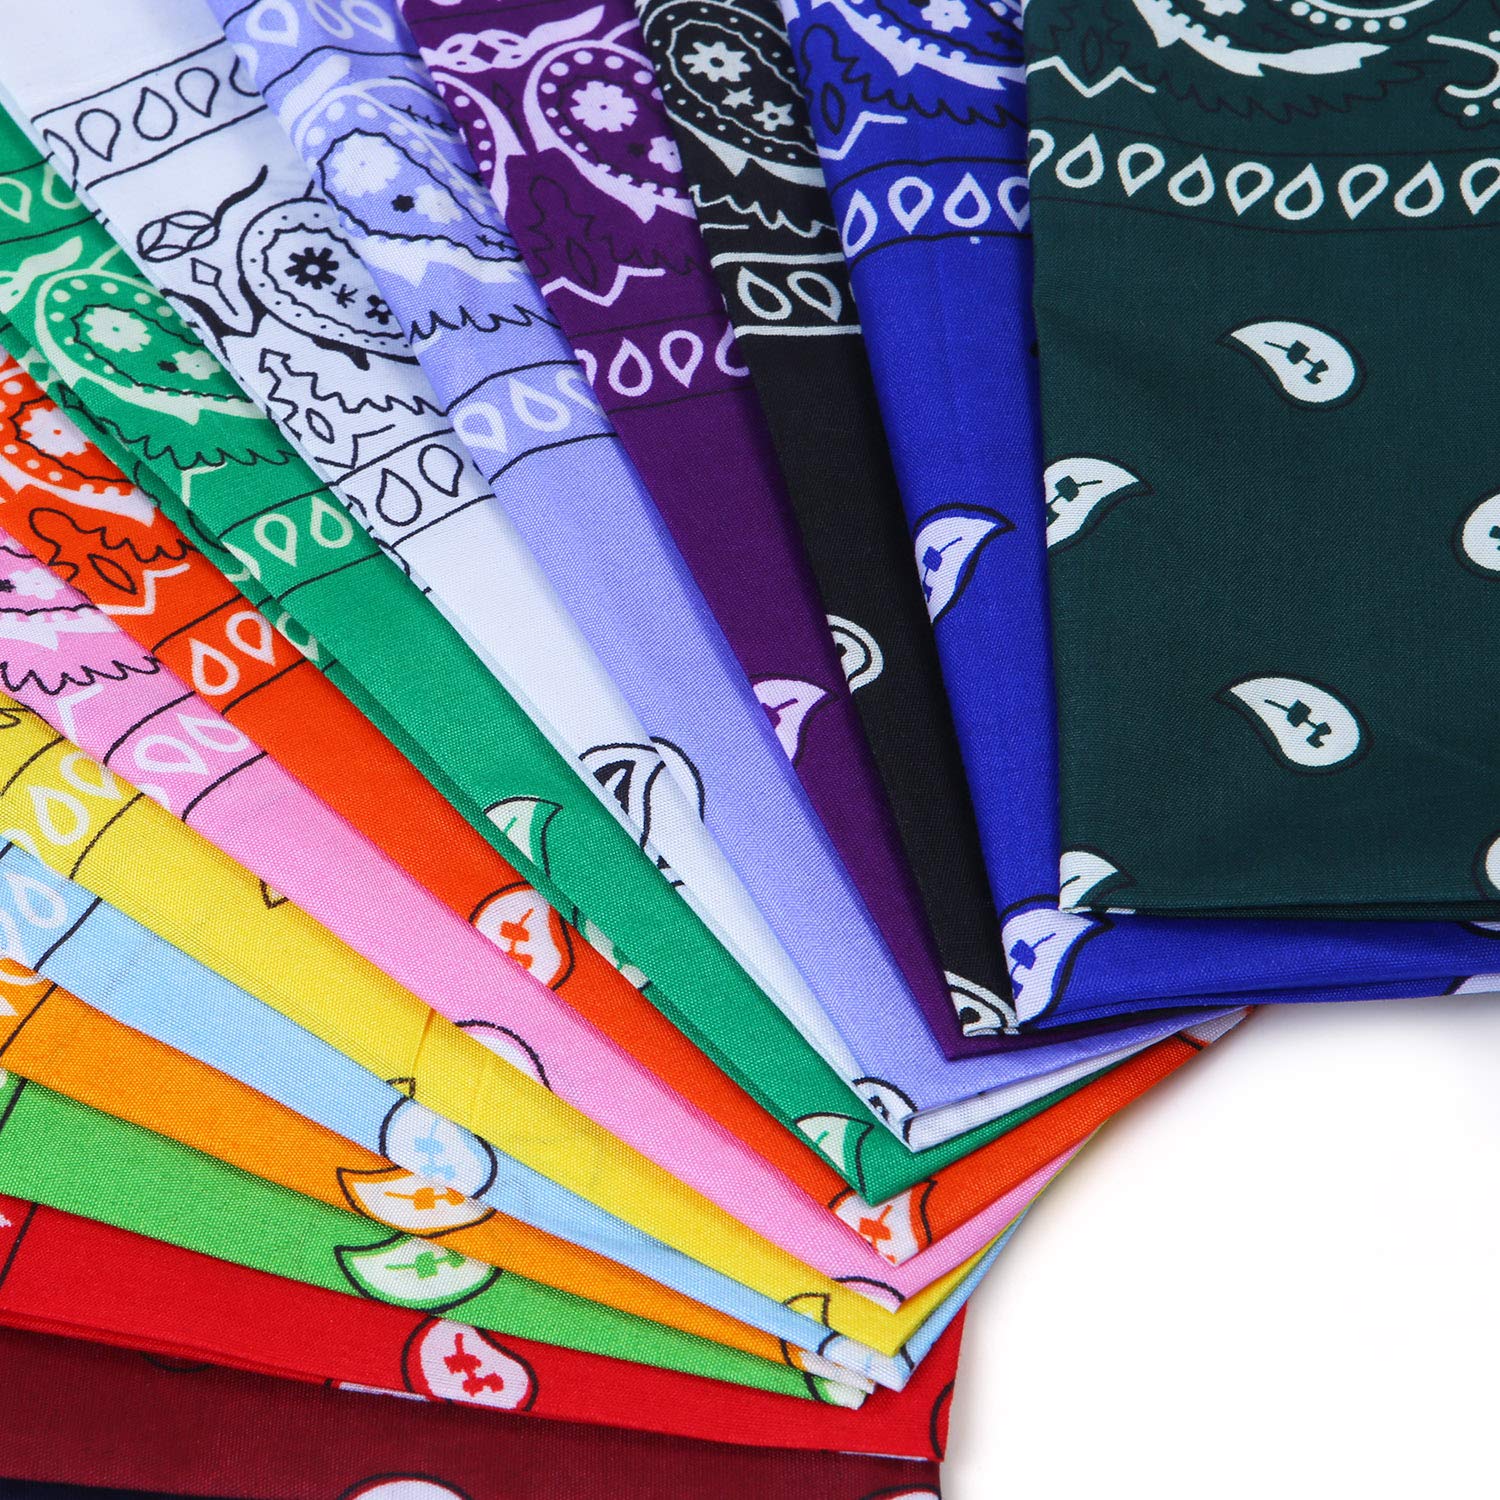 URATOT 16 Pieces Paisley Bandanas Cowboy Bandana Handkerchiefs Paisley Print Head Wrap Scarf, Assorted 16 Colors